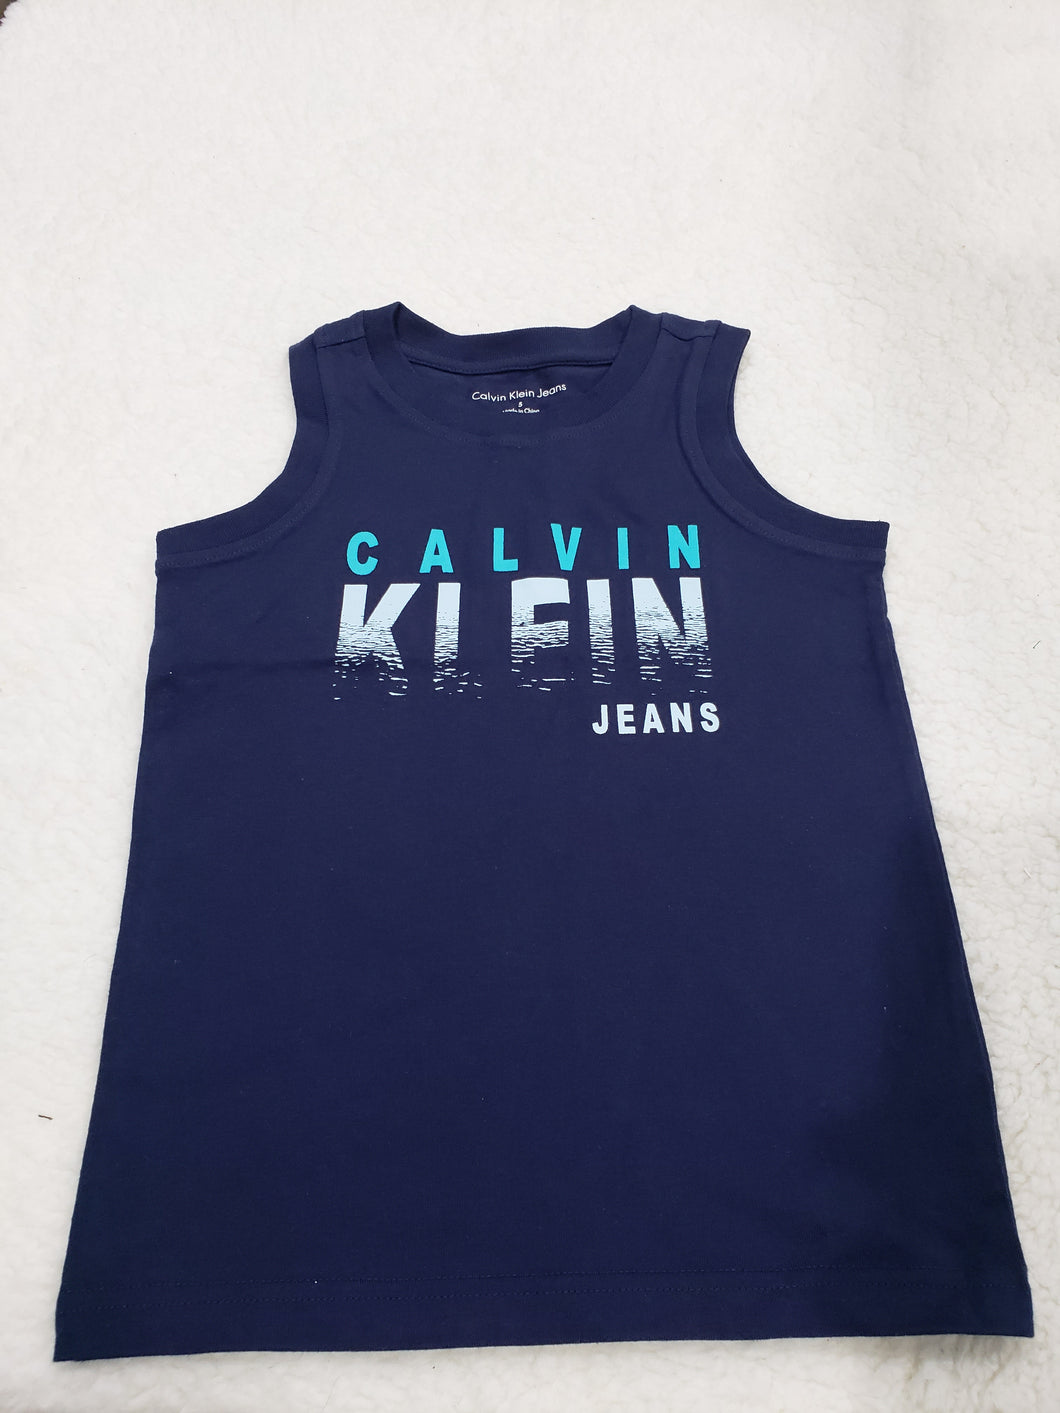 Calvin Klein boys sleeveless tshirt 5t navy